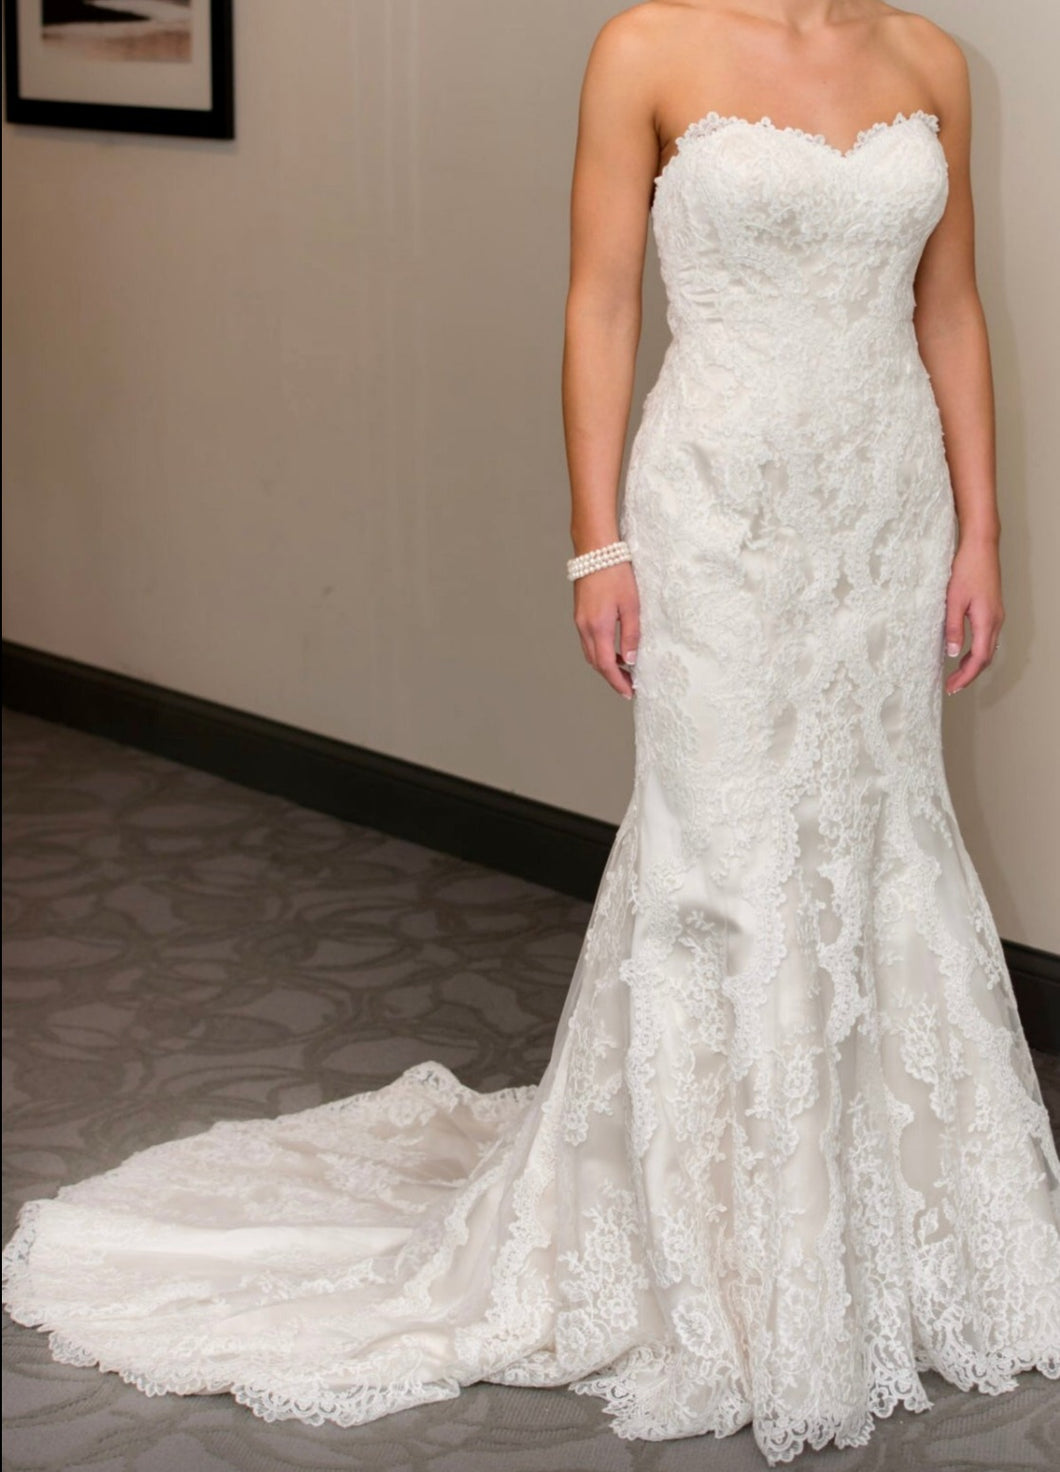 Stella York 'Lace ' wedding dress size-06 PREOWNED